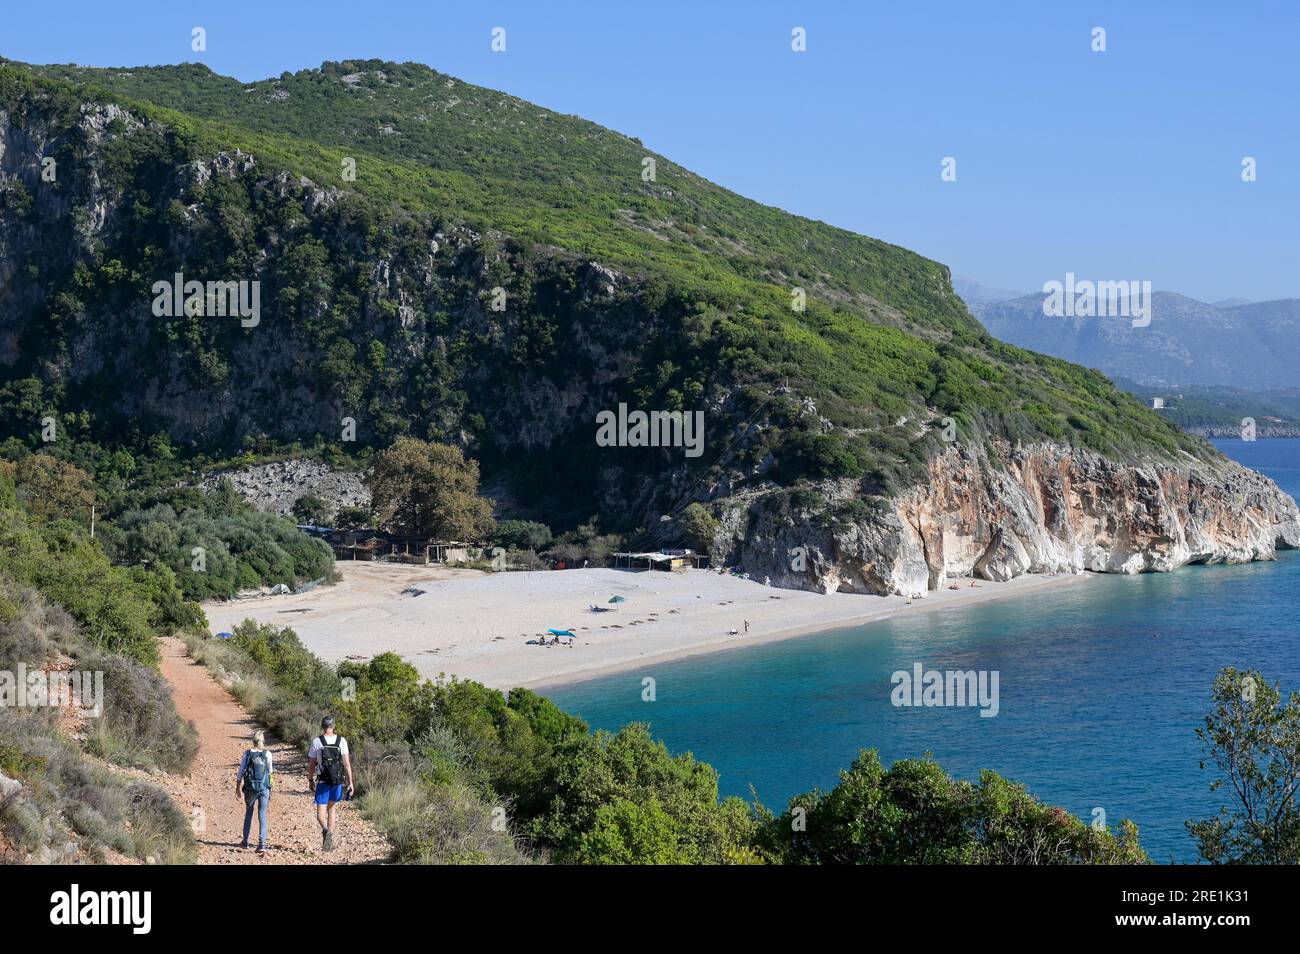 ALBANIA, Dhërni, Gjipe Beach beach at rocky Canyon at Adria, Mediterranean sea / ALBANIEN, Dherni, Jipe Strand an einem felsigen Canyon an der albanischen Riviera an der Adria, Mittelmeer Stock Photo